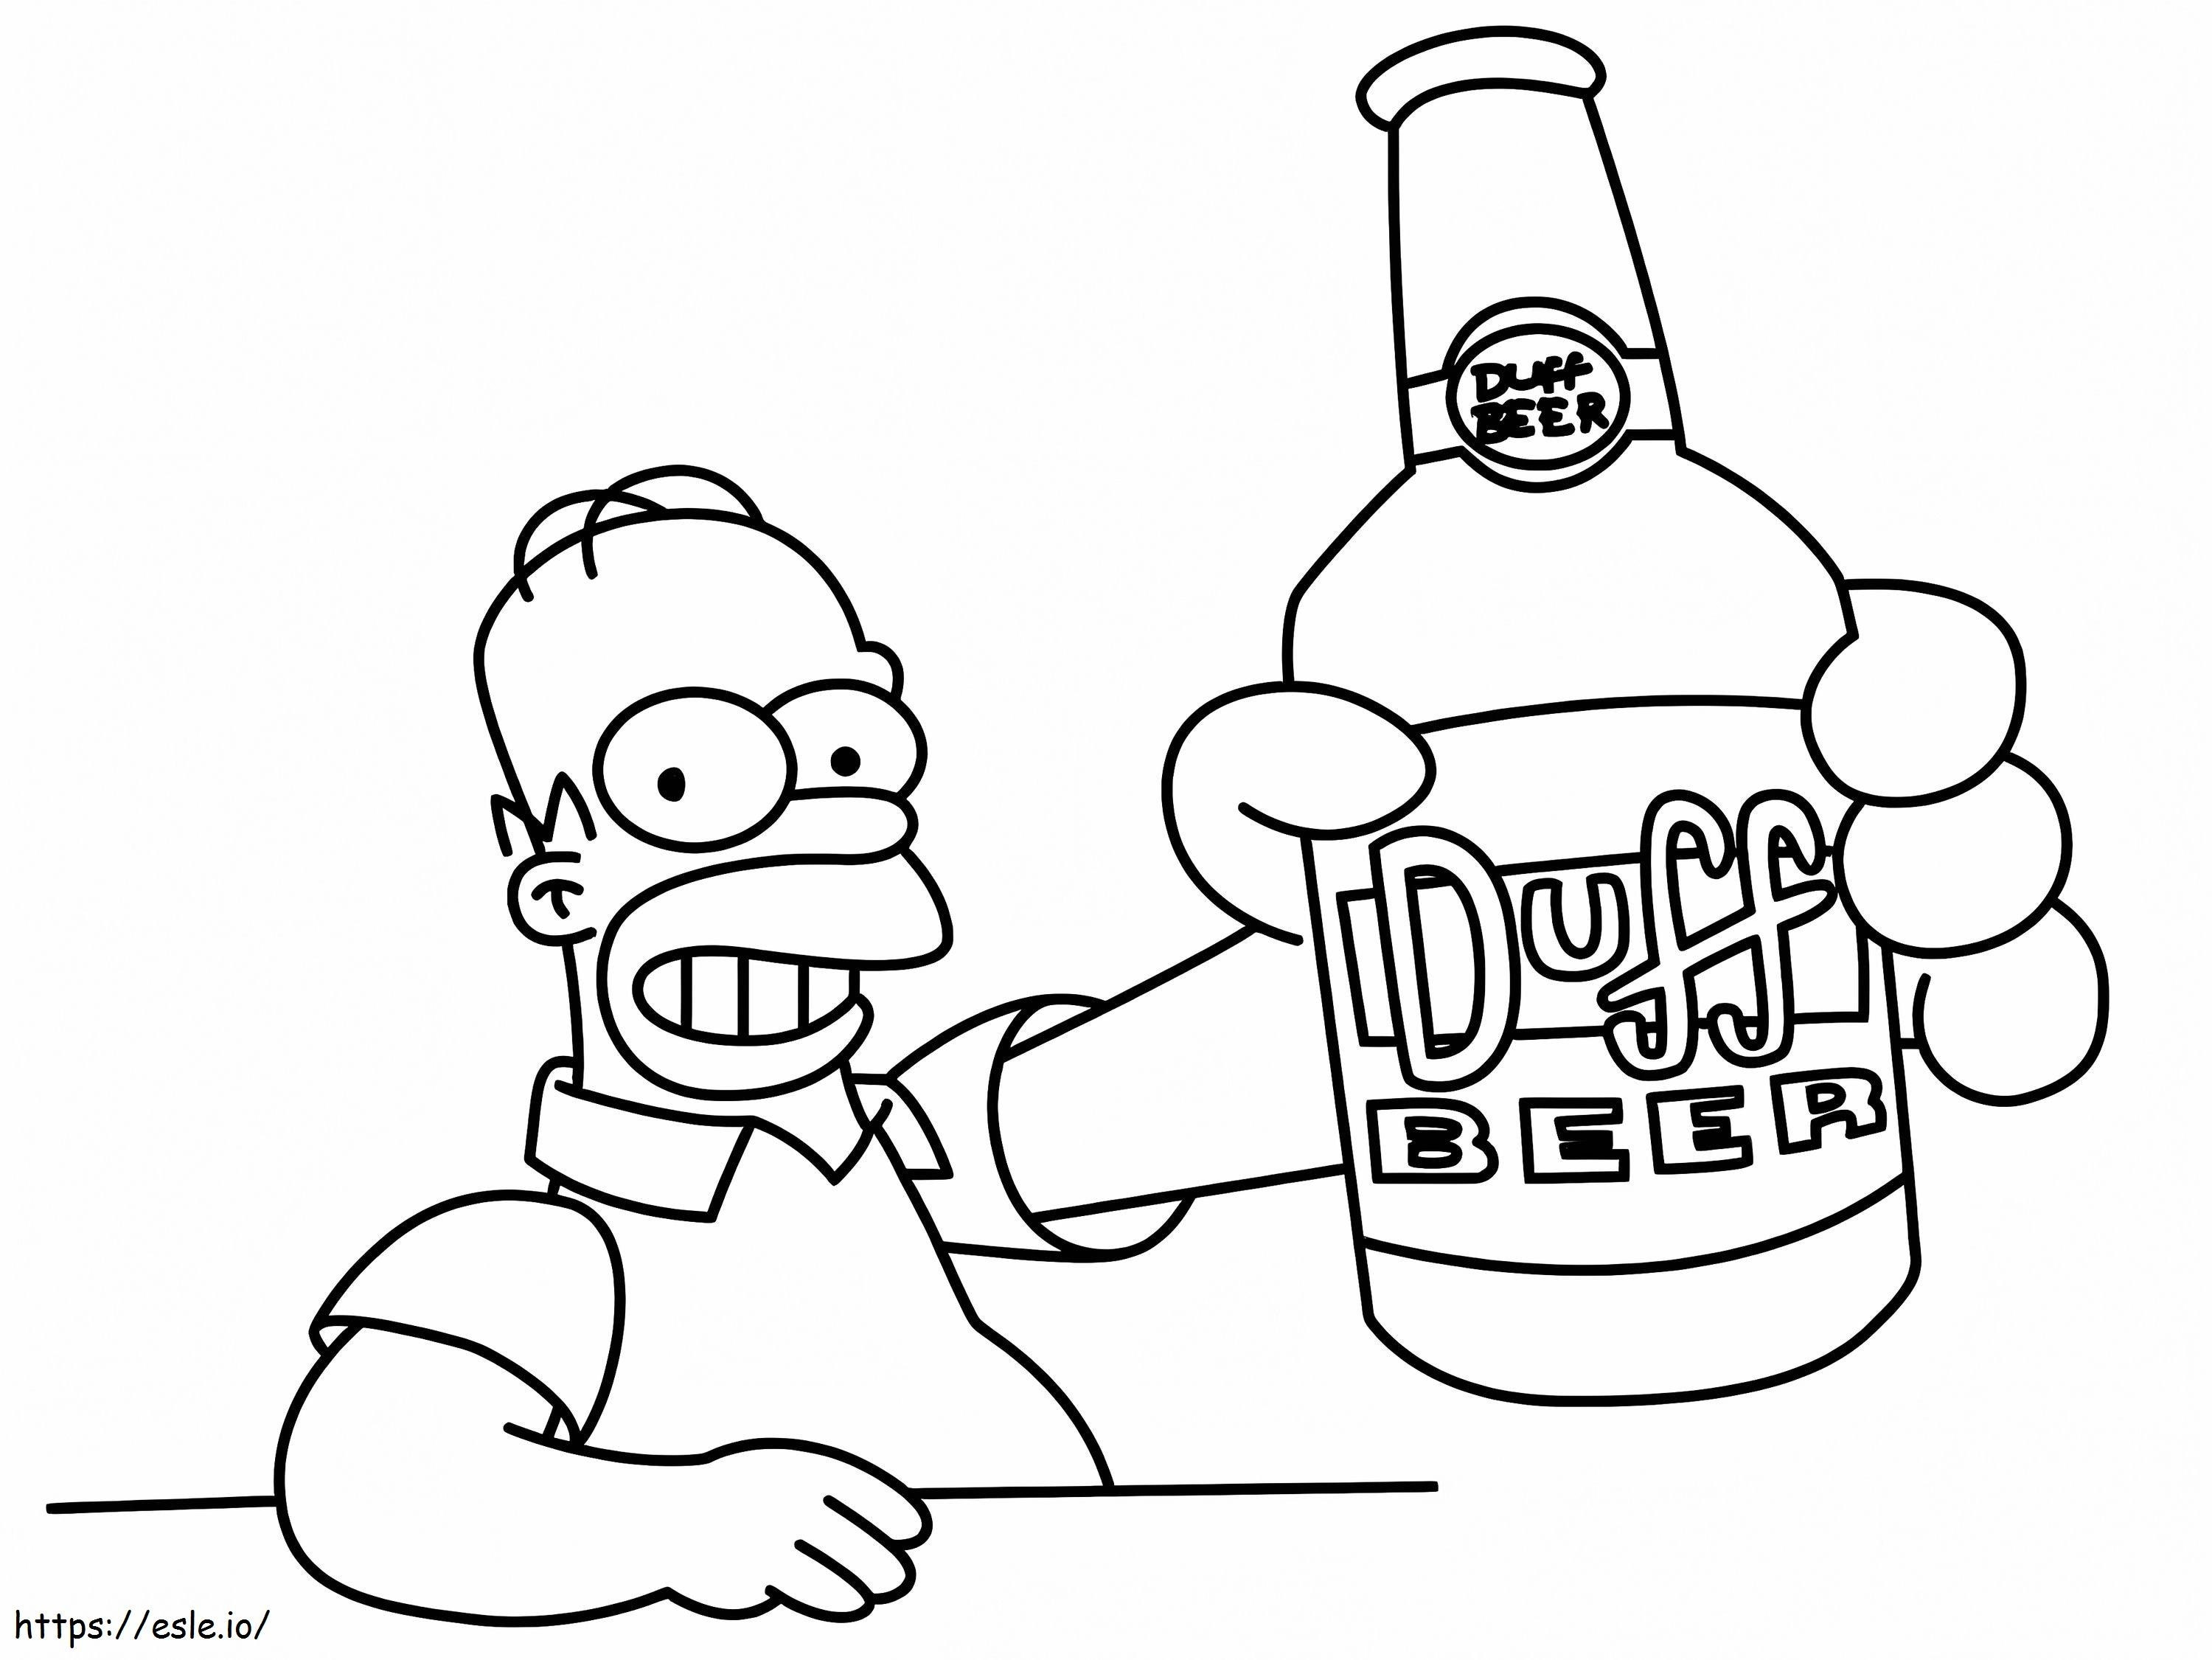 Homer Simpson juomassa värityskuva